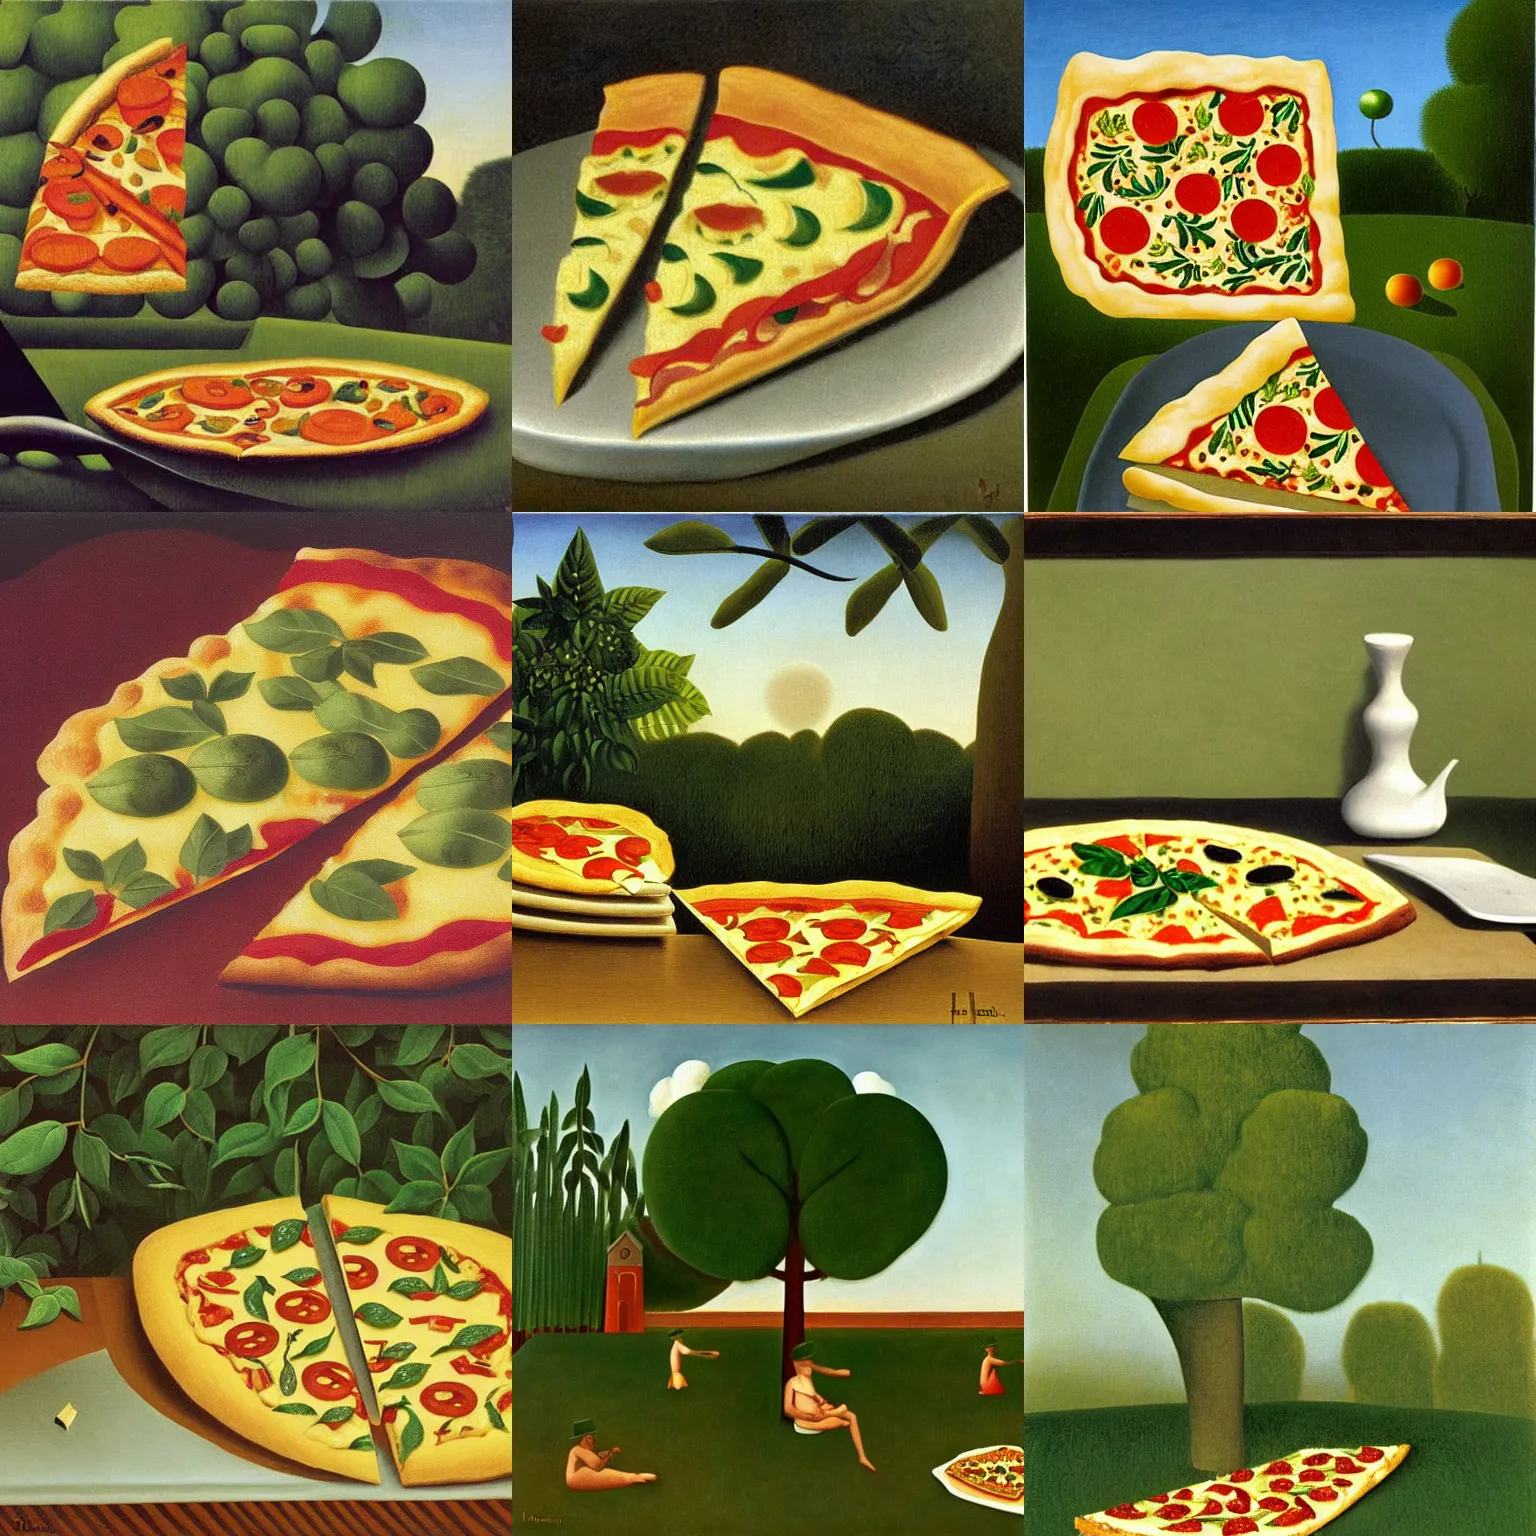 Prompt: Slice of Pizza - Henri Rousseau